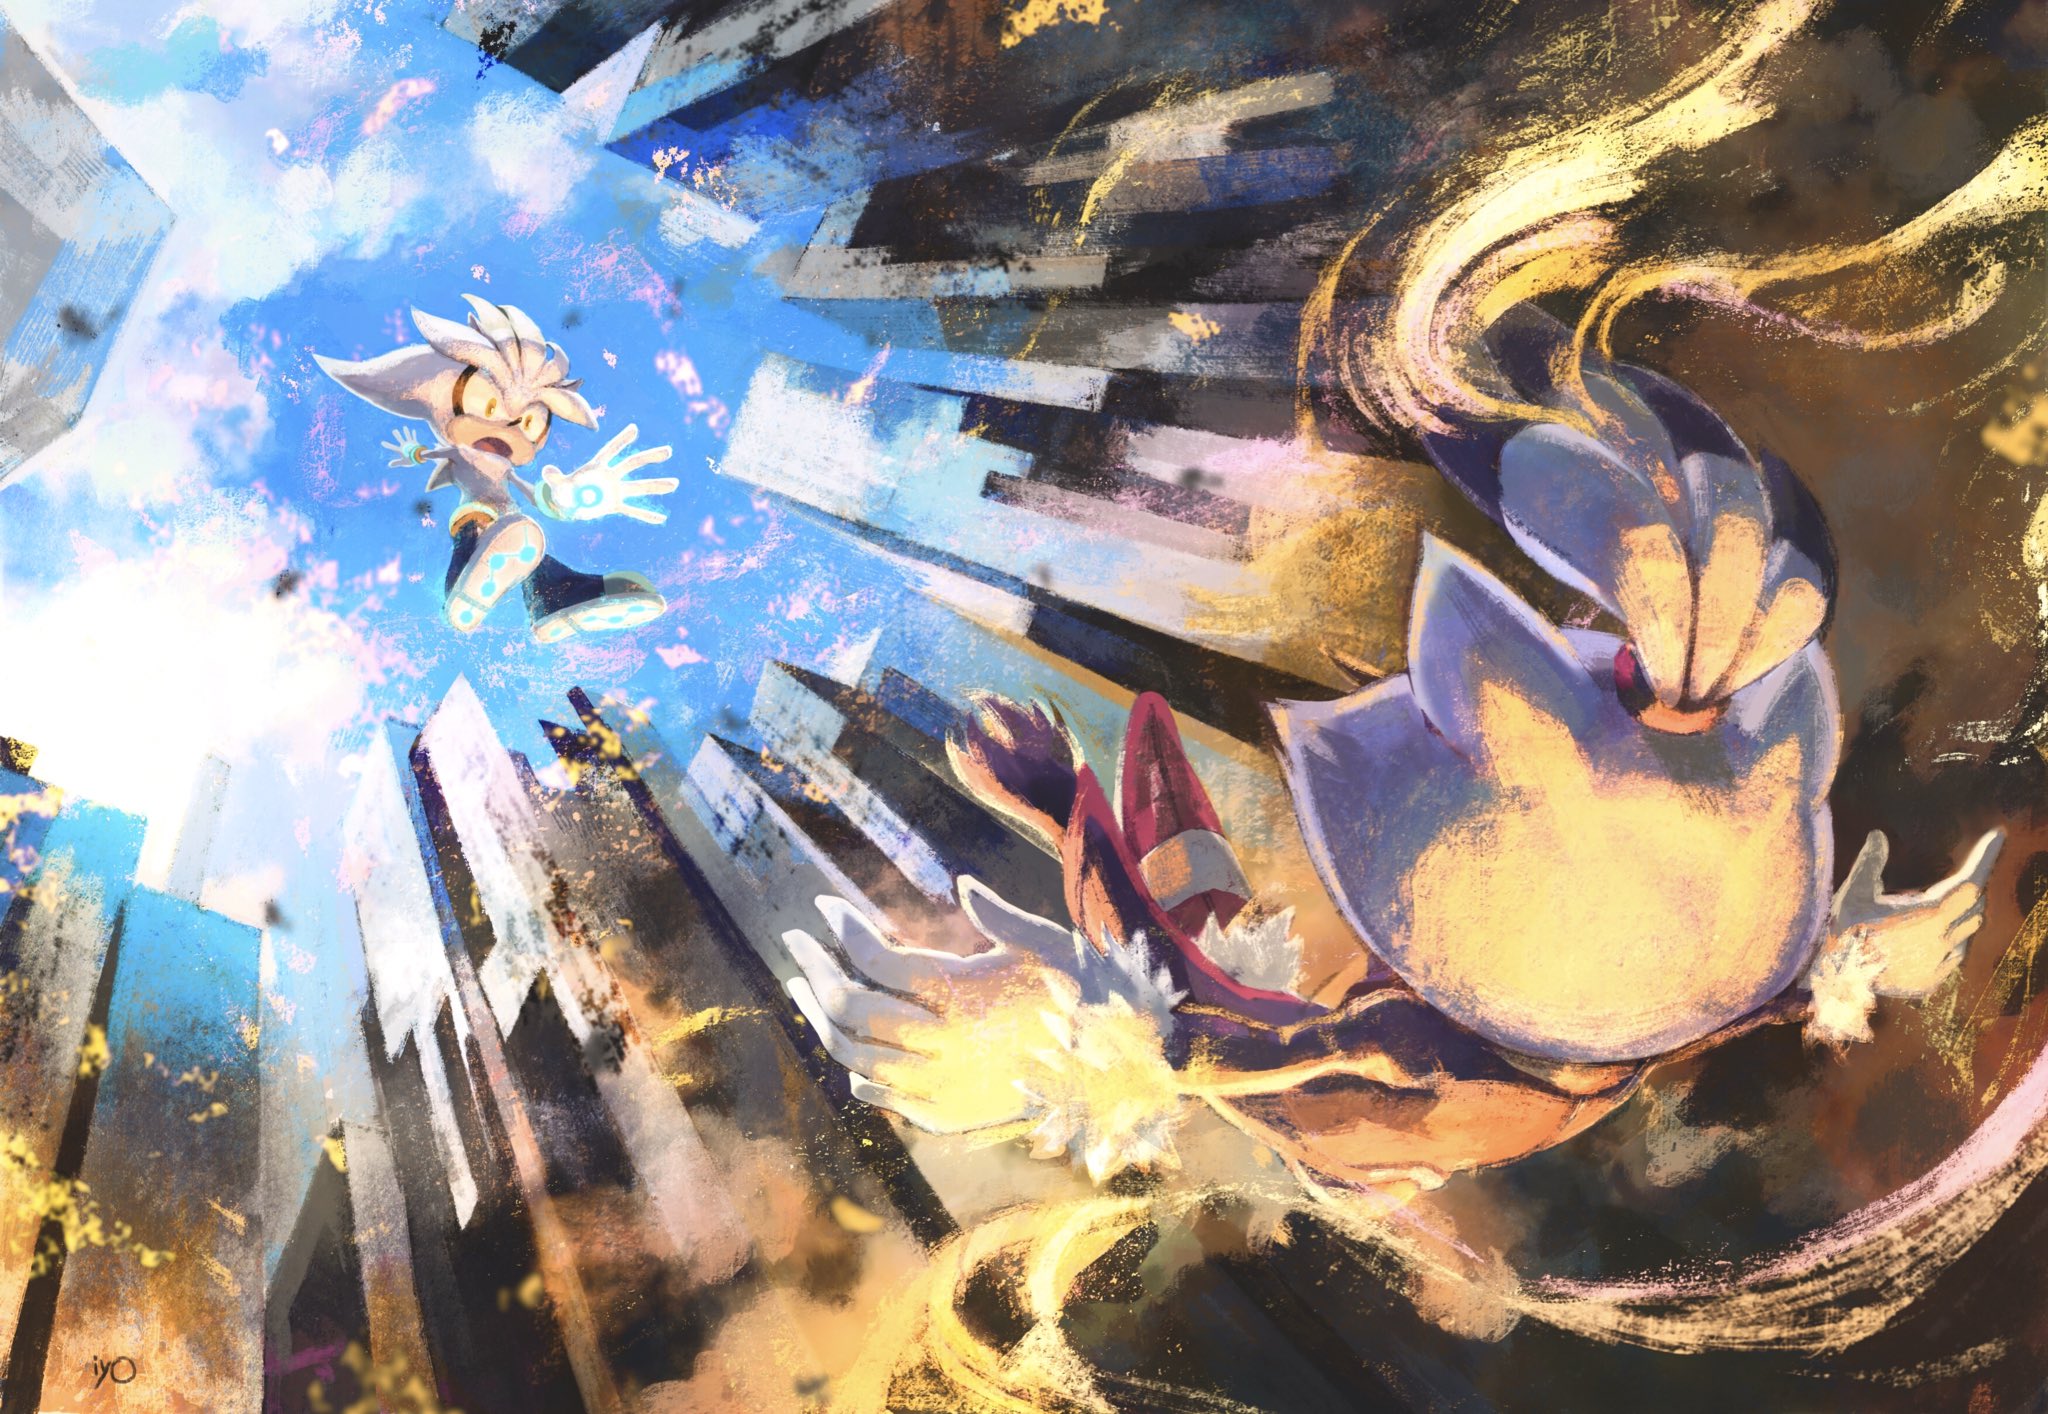 Blaze and Silver - Sonic the Hedgehog Wallpaper (44570609) - Fanpop ...